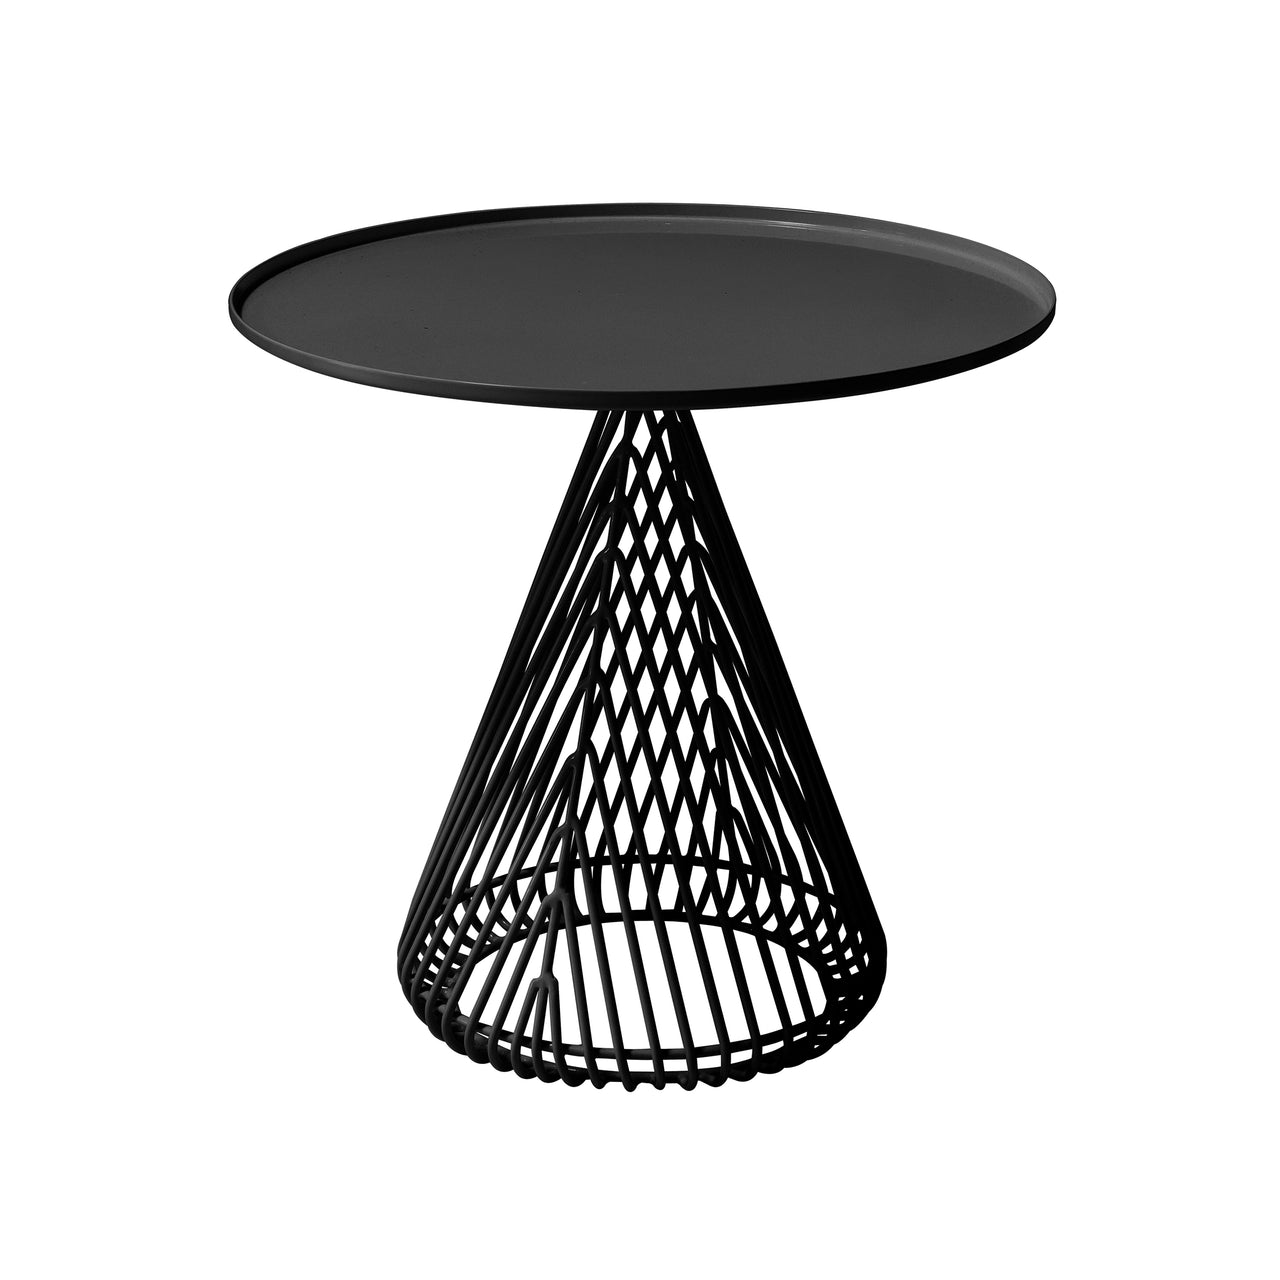 Cono Side Table: Color + Black